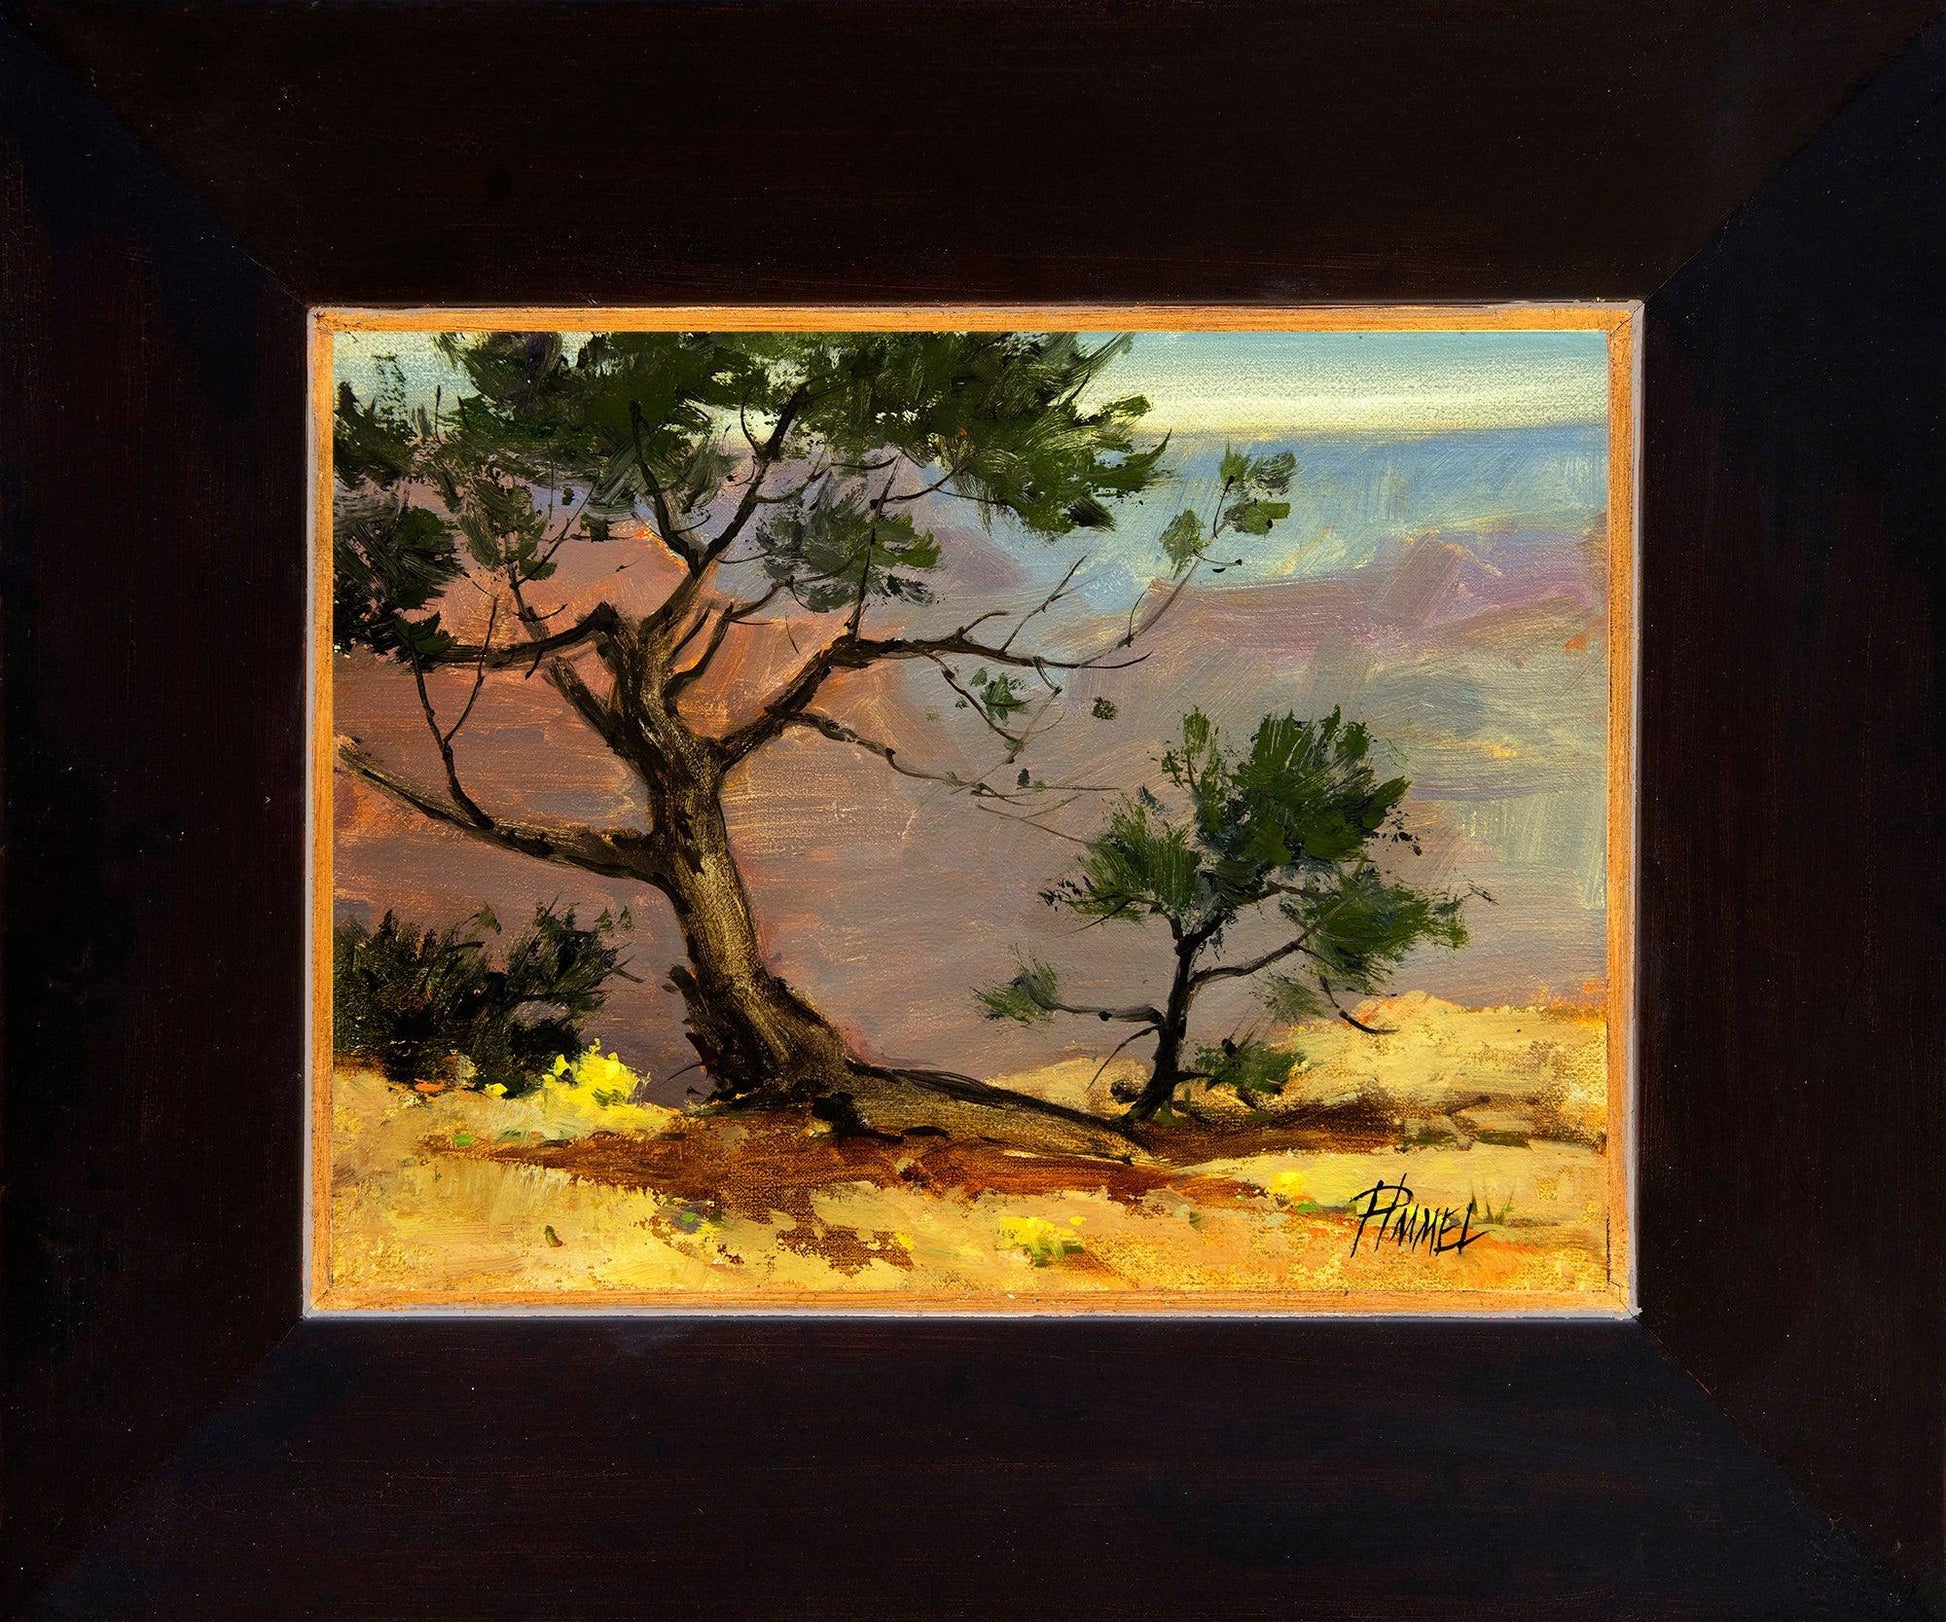 Pima Point Bonsai-Painting-Peggy Immel-Sorrel Sky Gallery